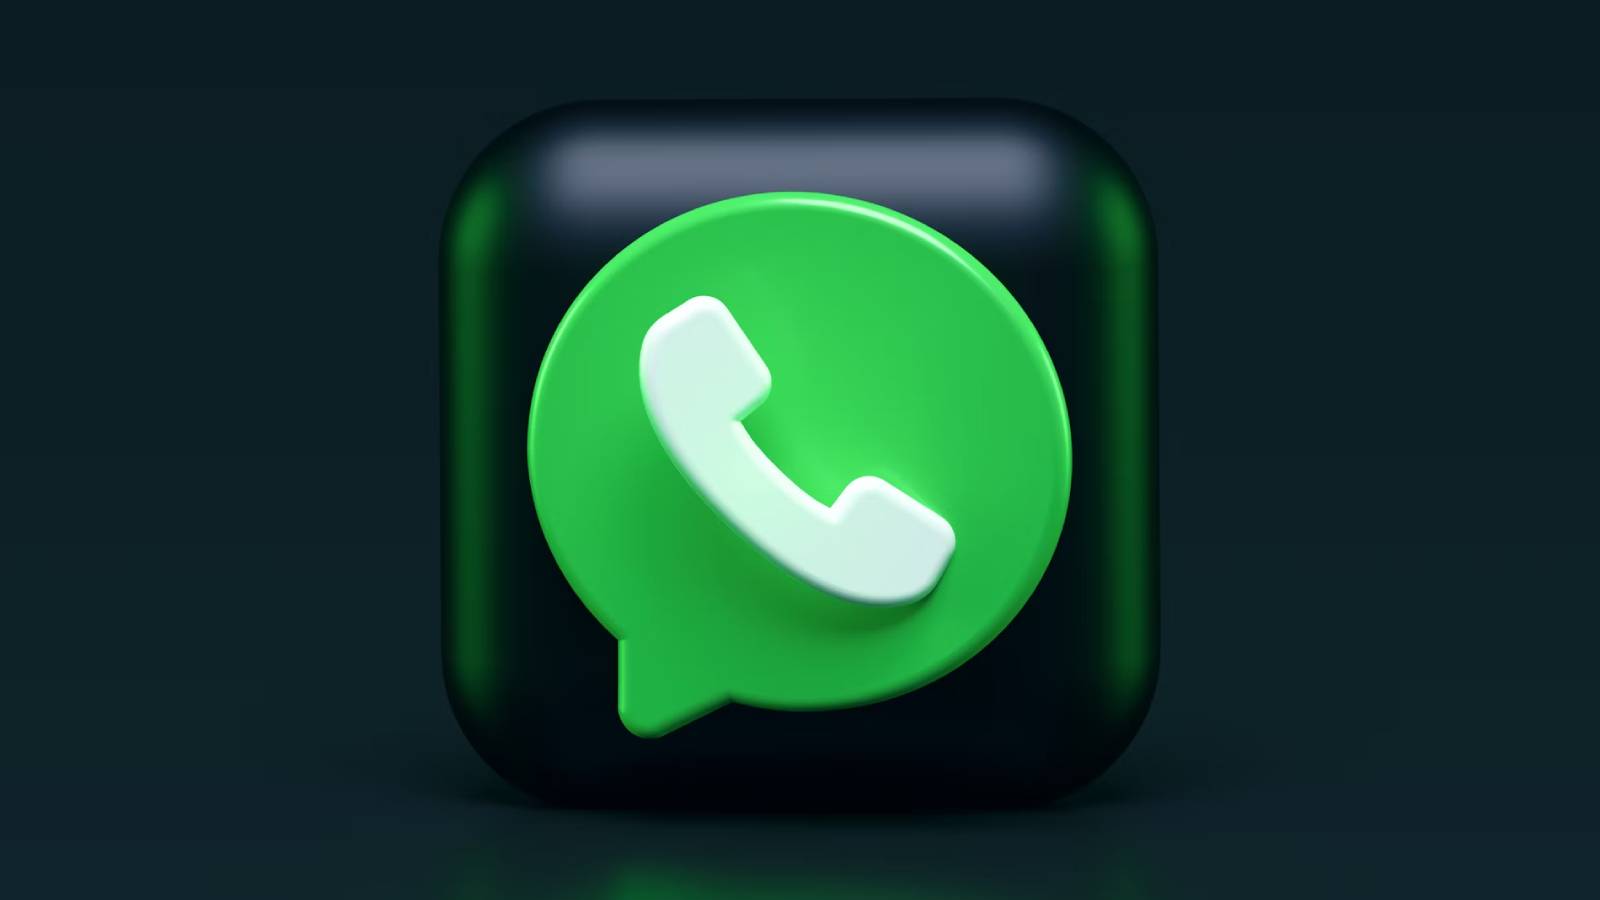 The WhatsApp logo in 3D by Alexander Shatov of Unsplash.com